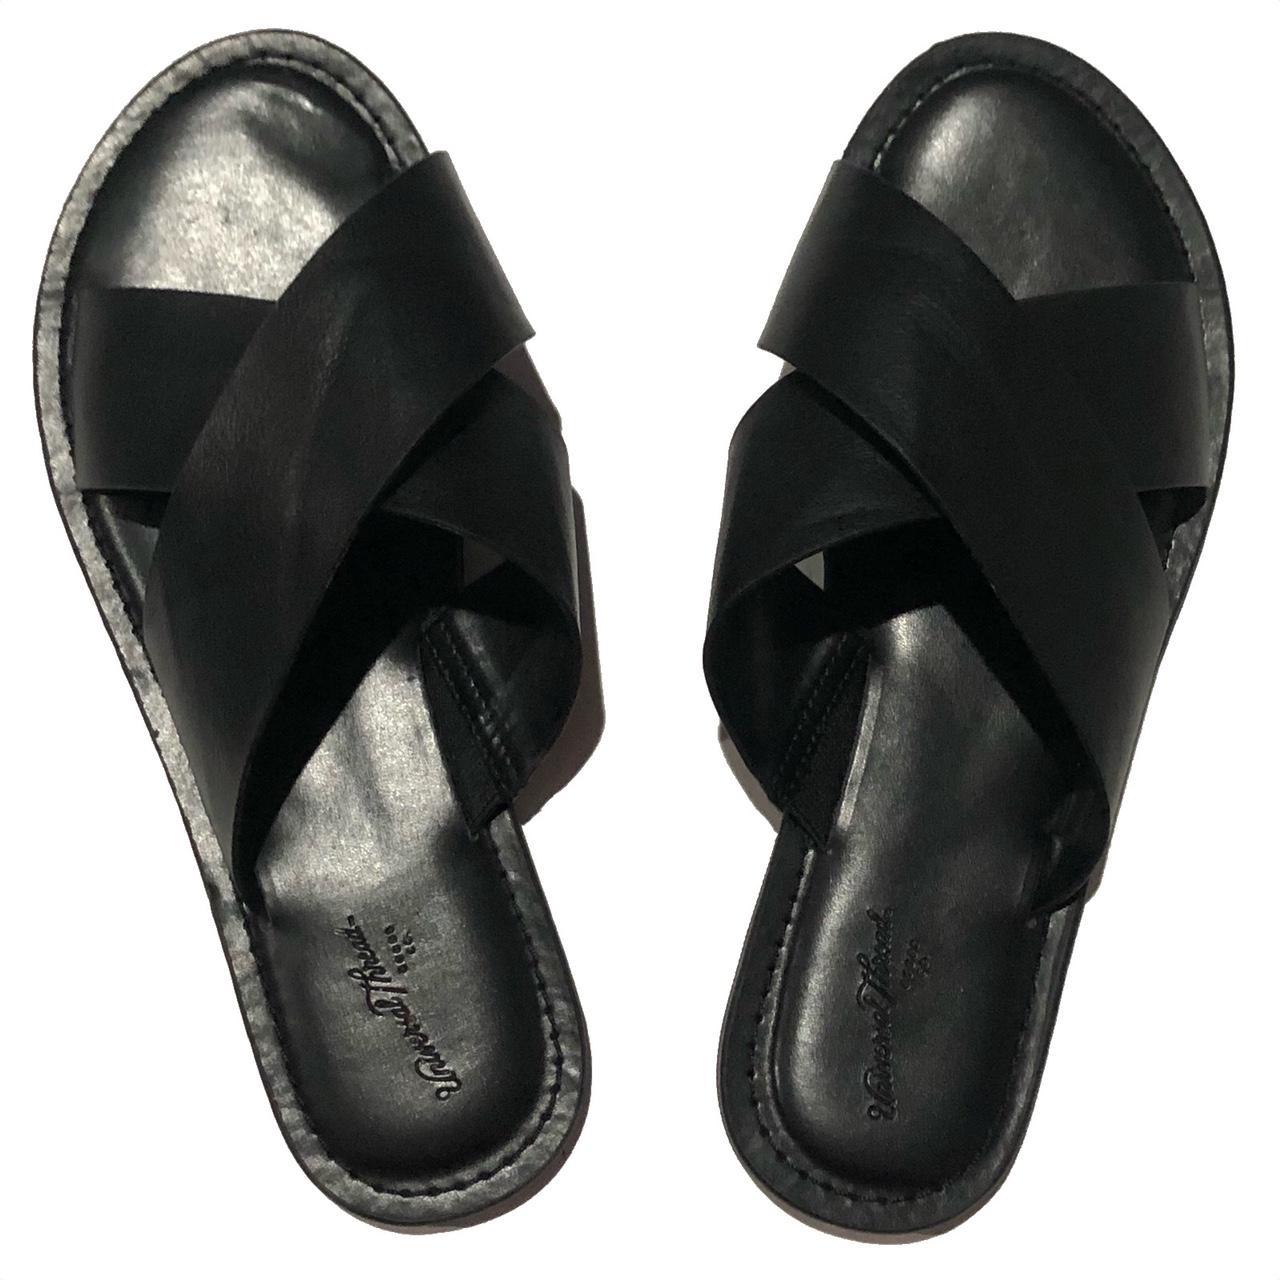 Black Cross Strap Sandals. ⭐️⭐️⭐️ ABOUT THE ITEM... - Depop